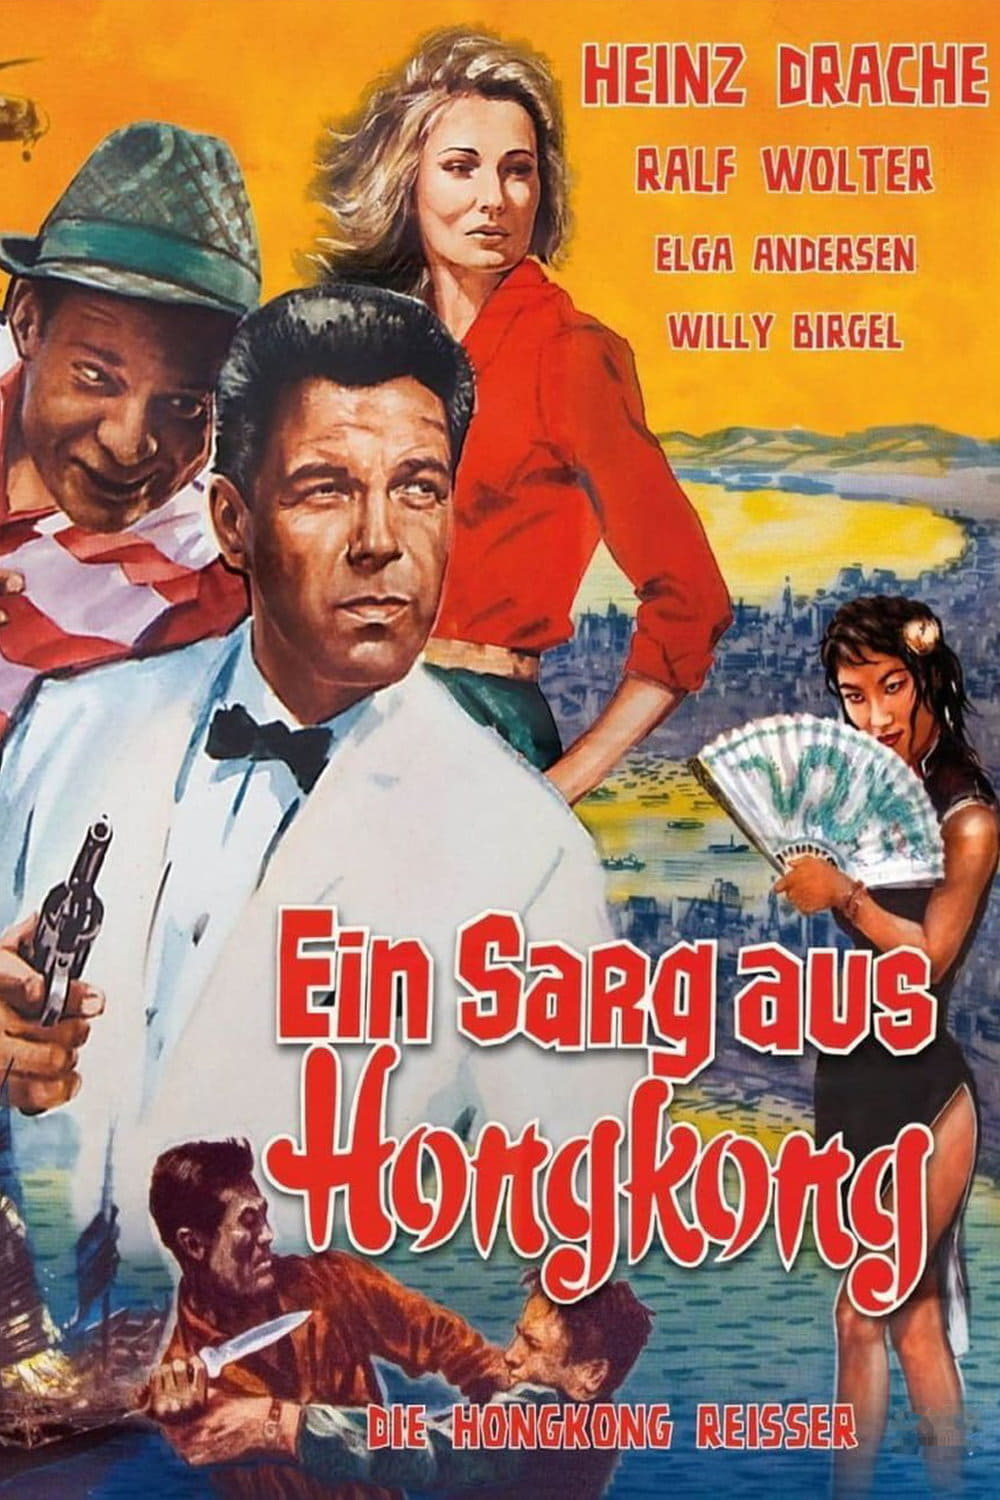 Du grisbi pour Hong Kong (1964)